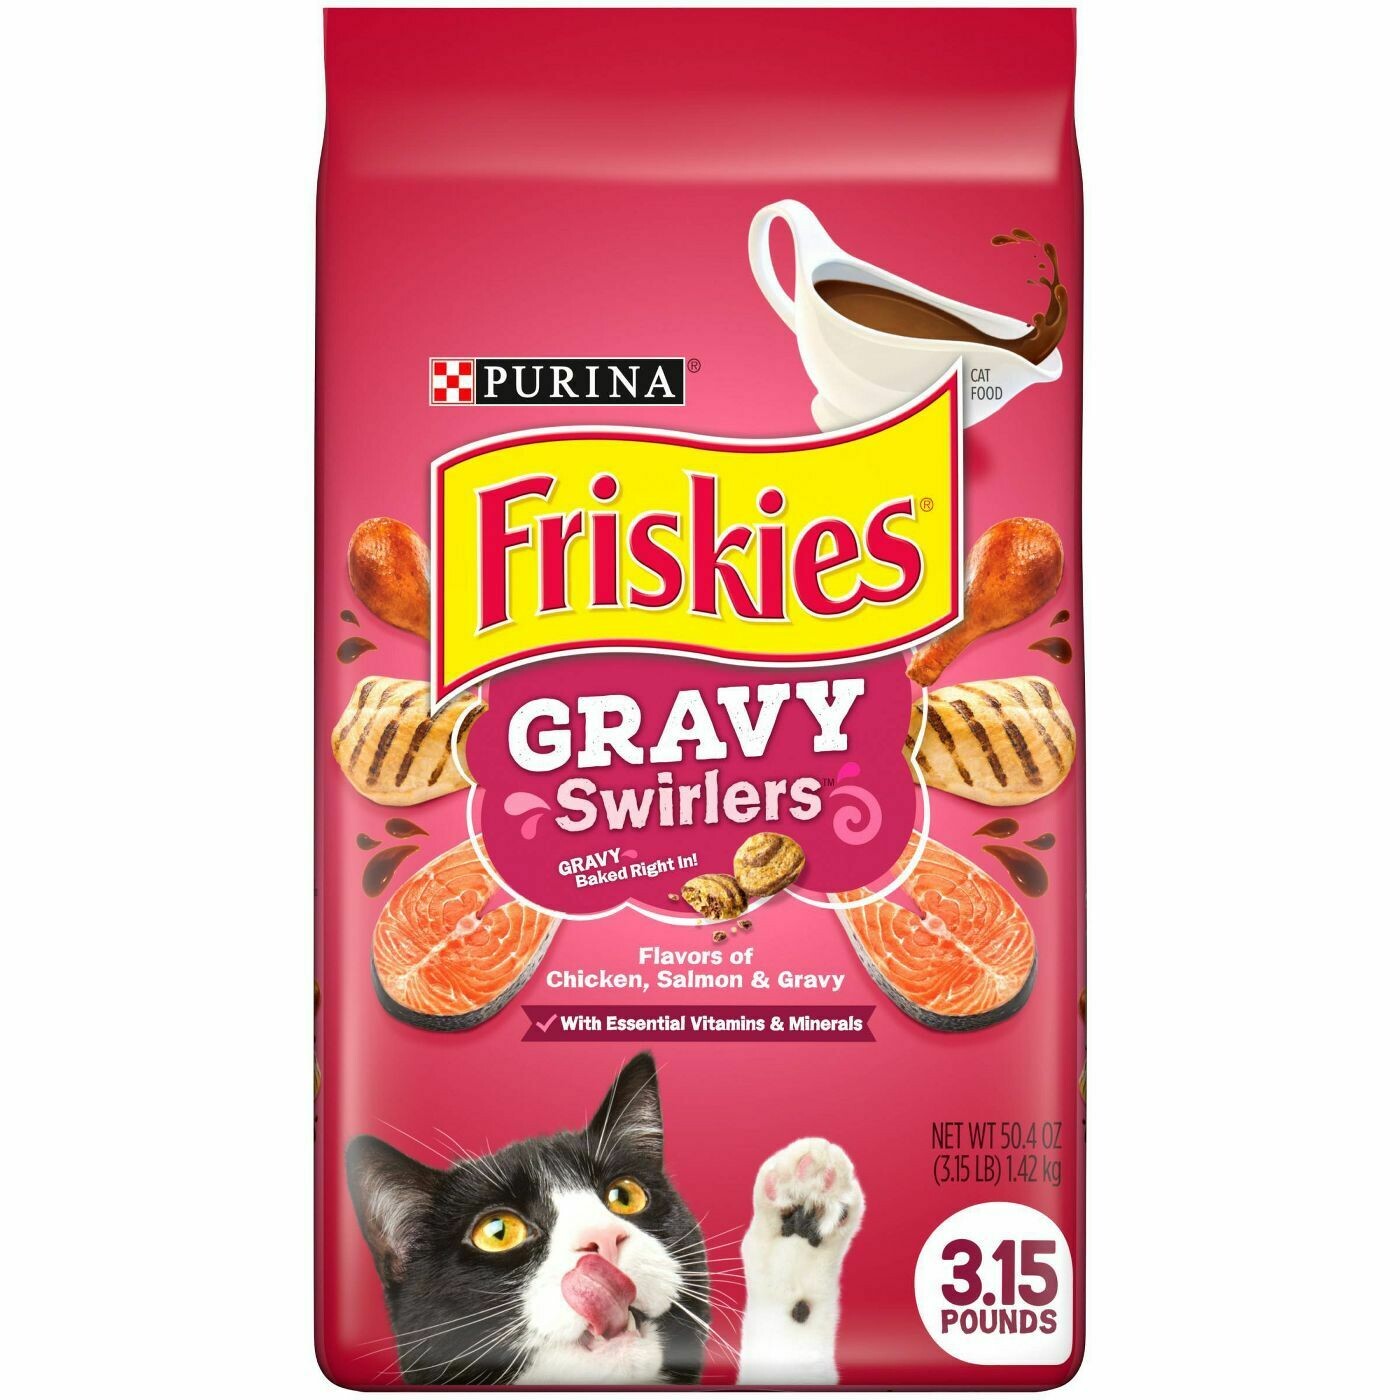 Friskies Gravy Swirlers 3.15lb